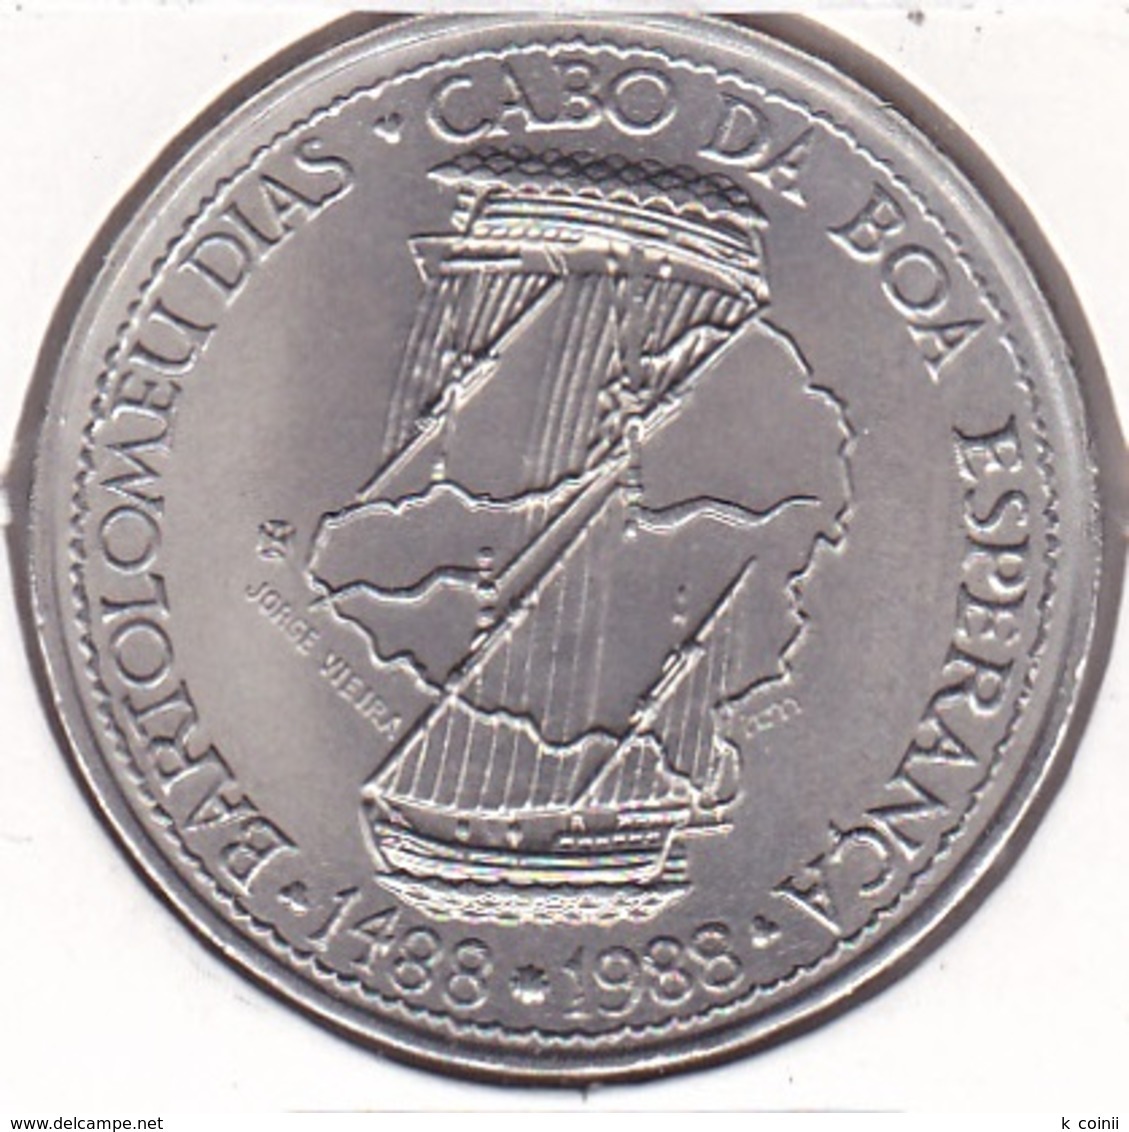 Portugal - 100 Escudos (100$00) 1988 - Golden Age Discoveries - UNC - Portugal